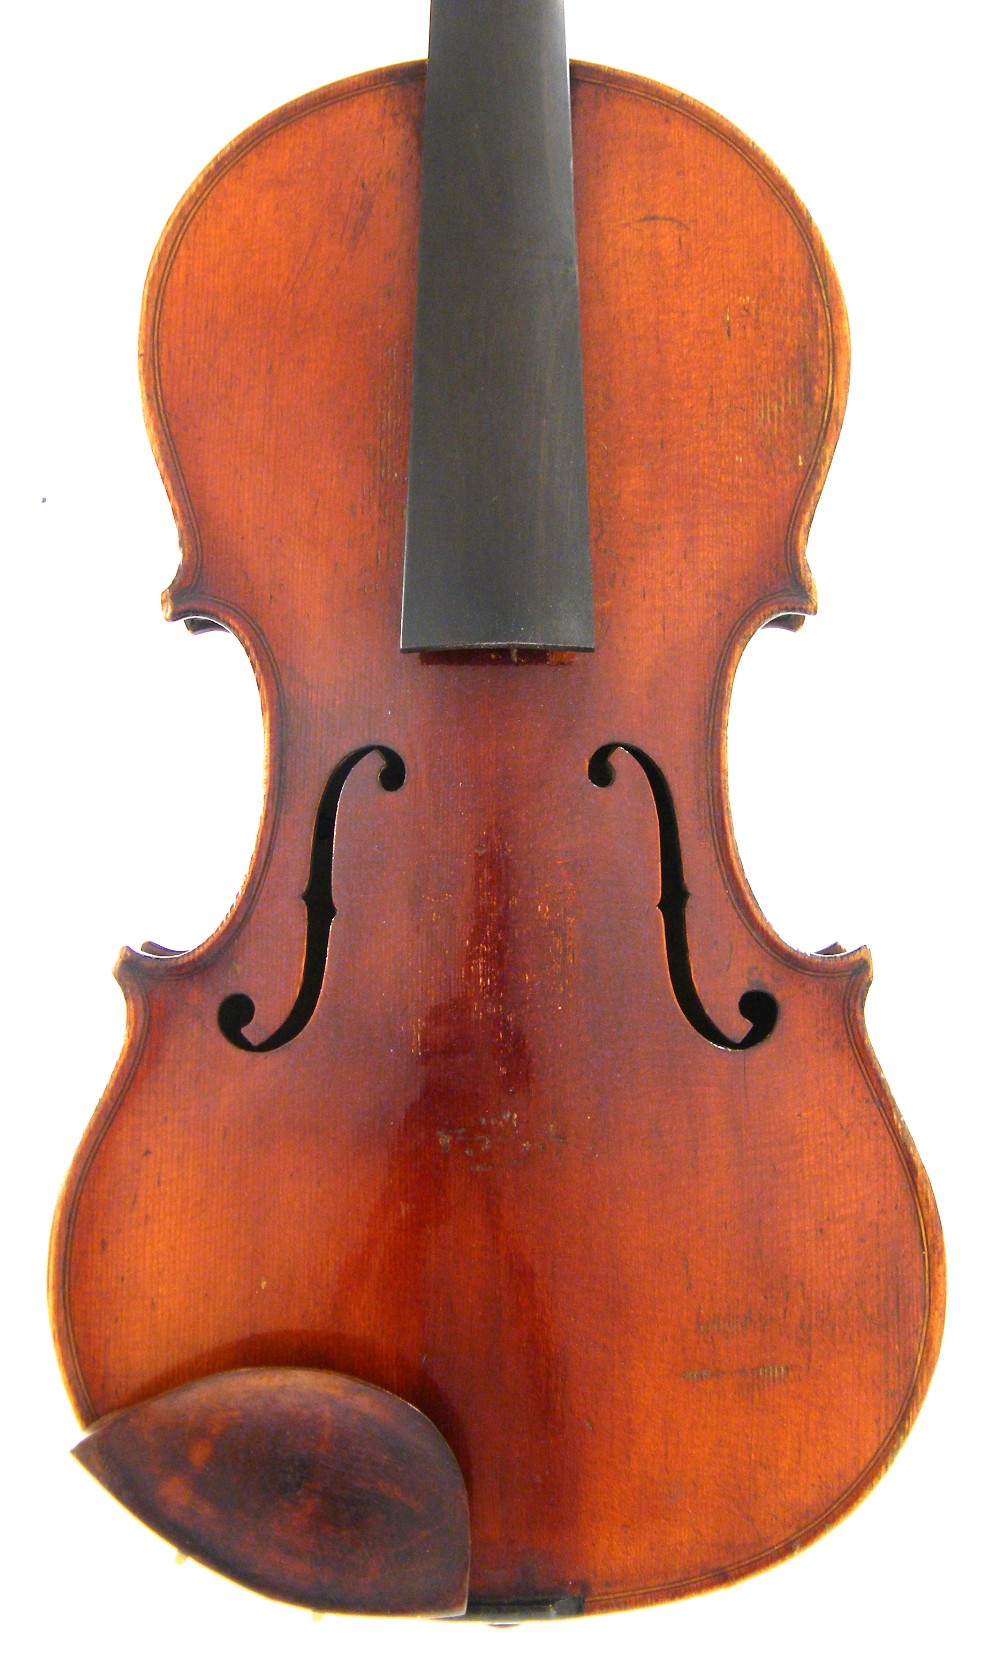 Early 20th century Mittenwald violin of the Neuner school 14", 35.60cm